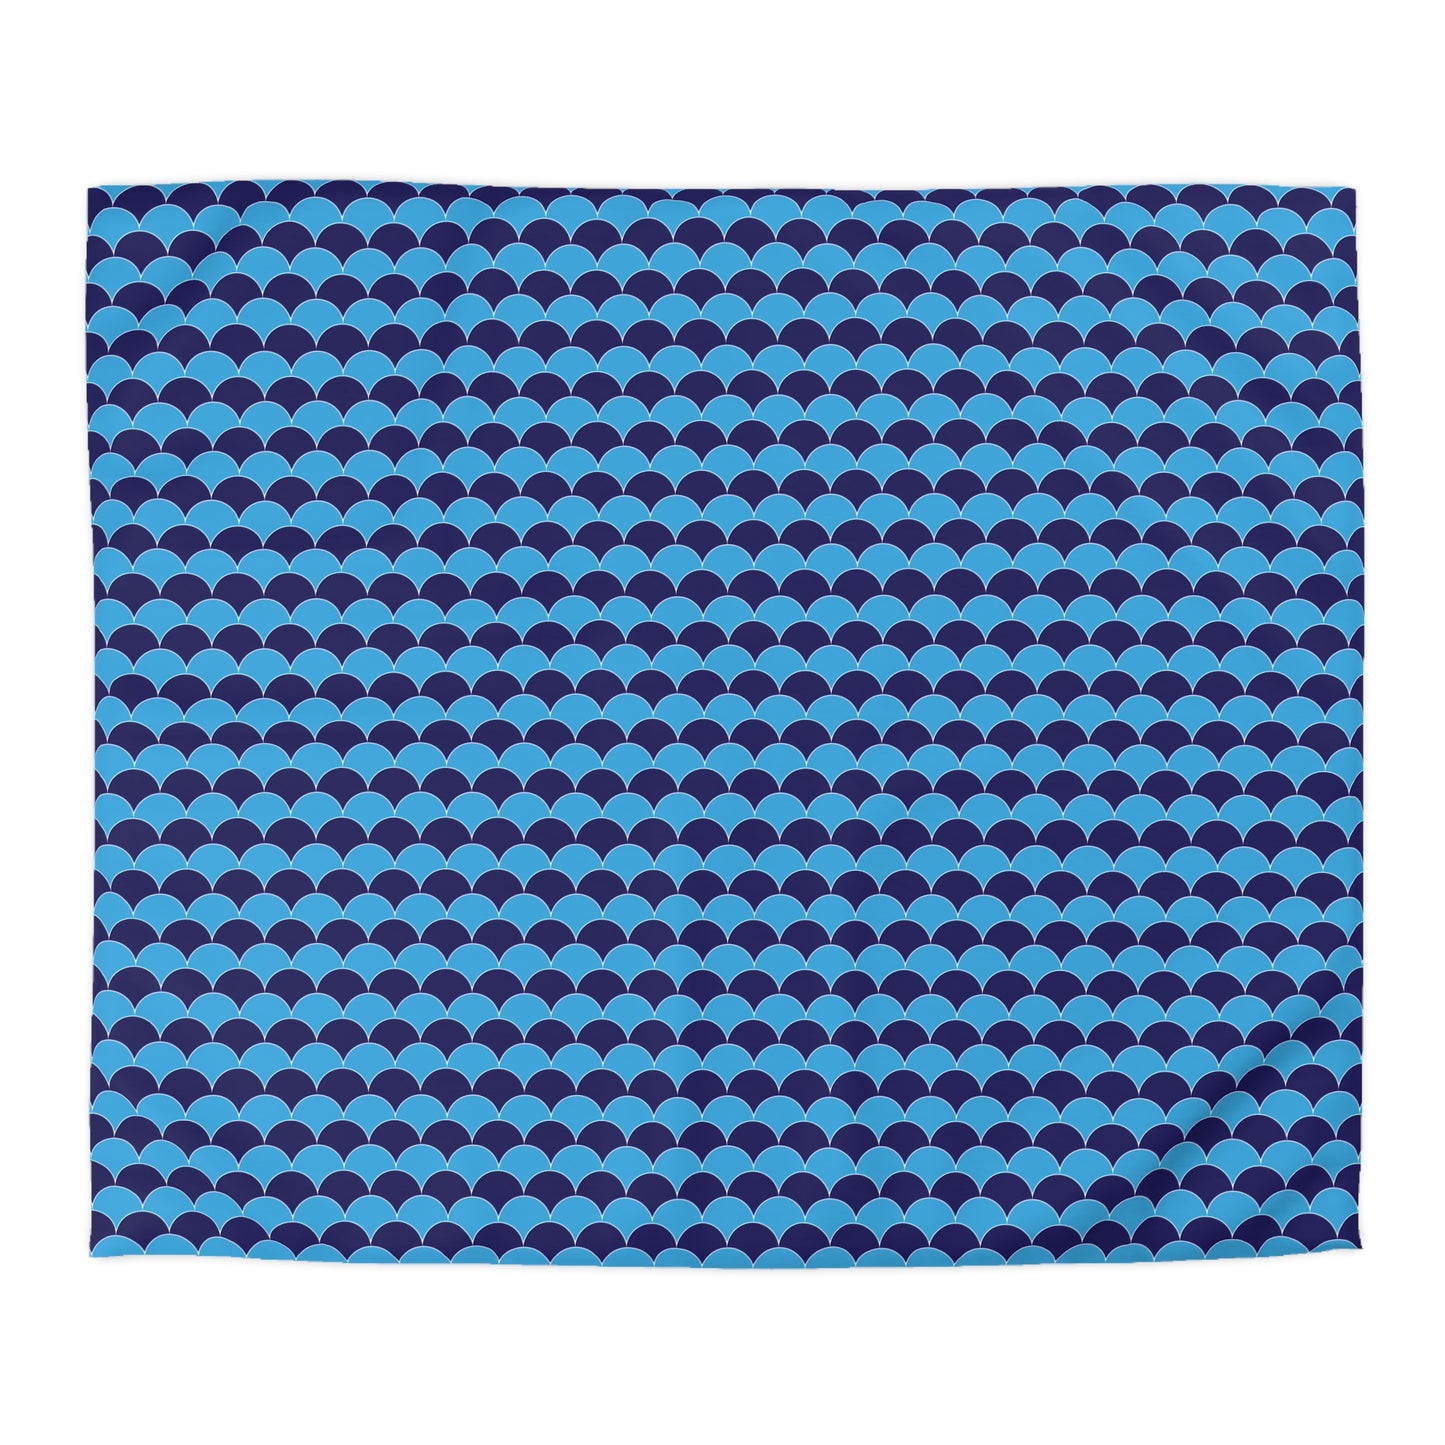 Blue Fans - Microfiber Duvet Cover